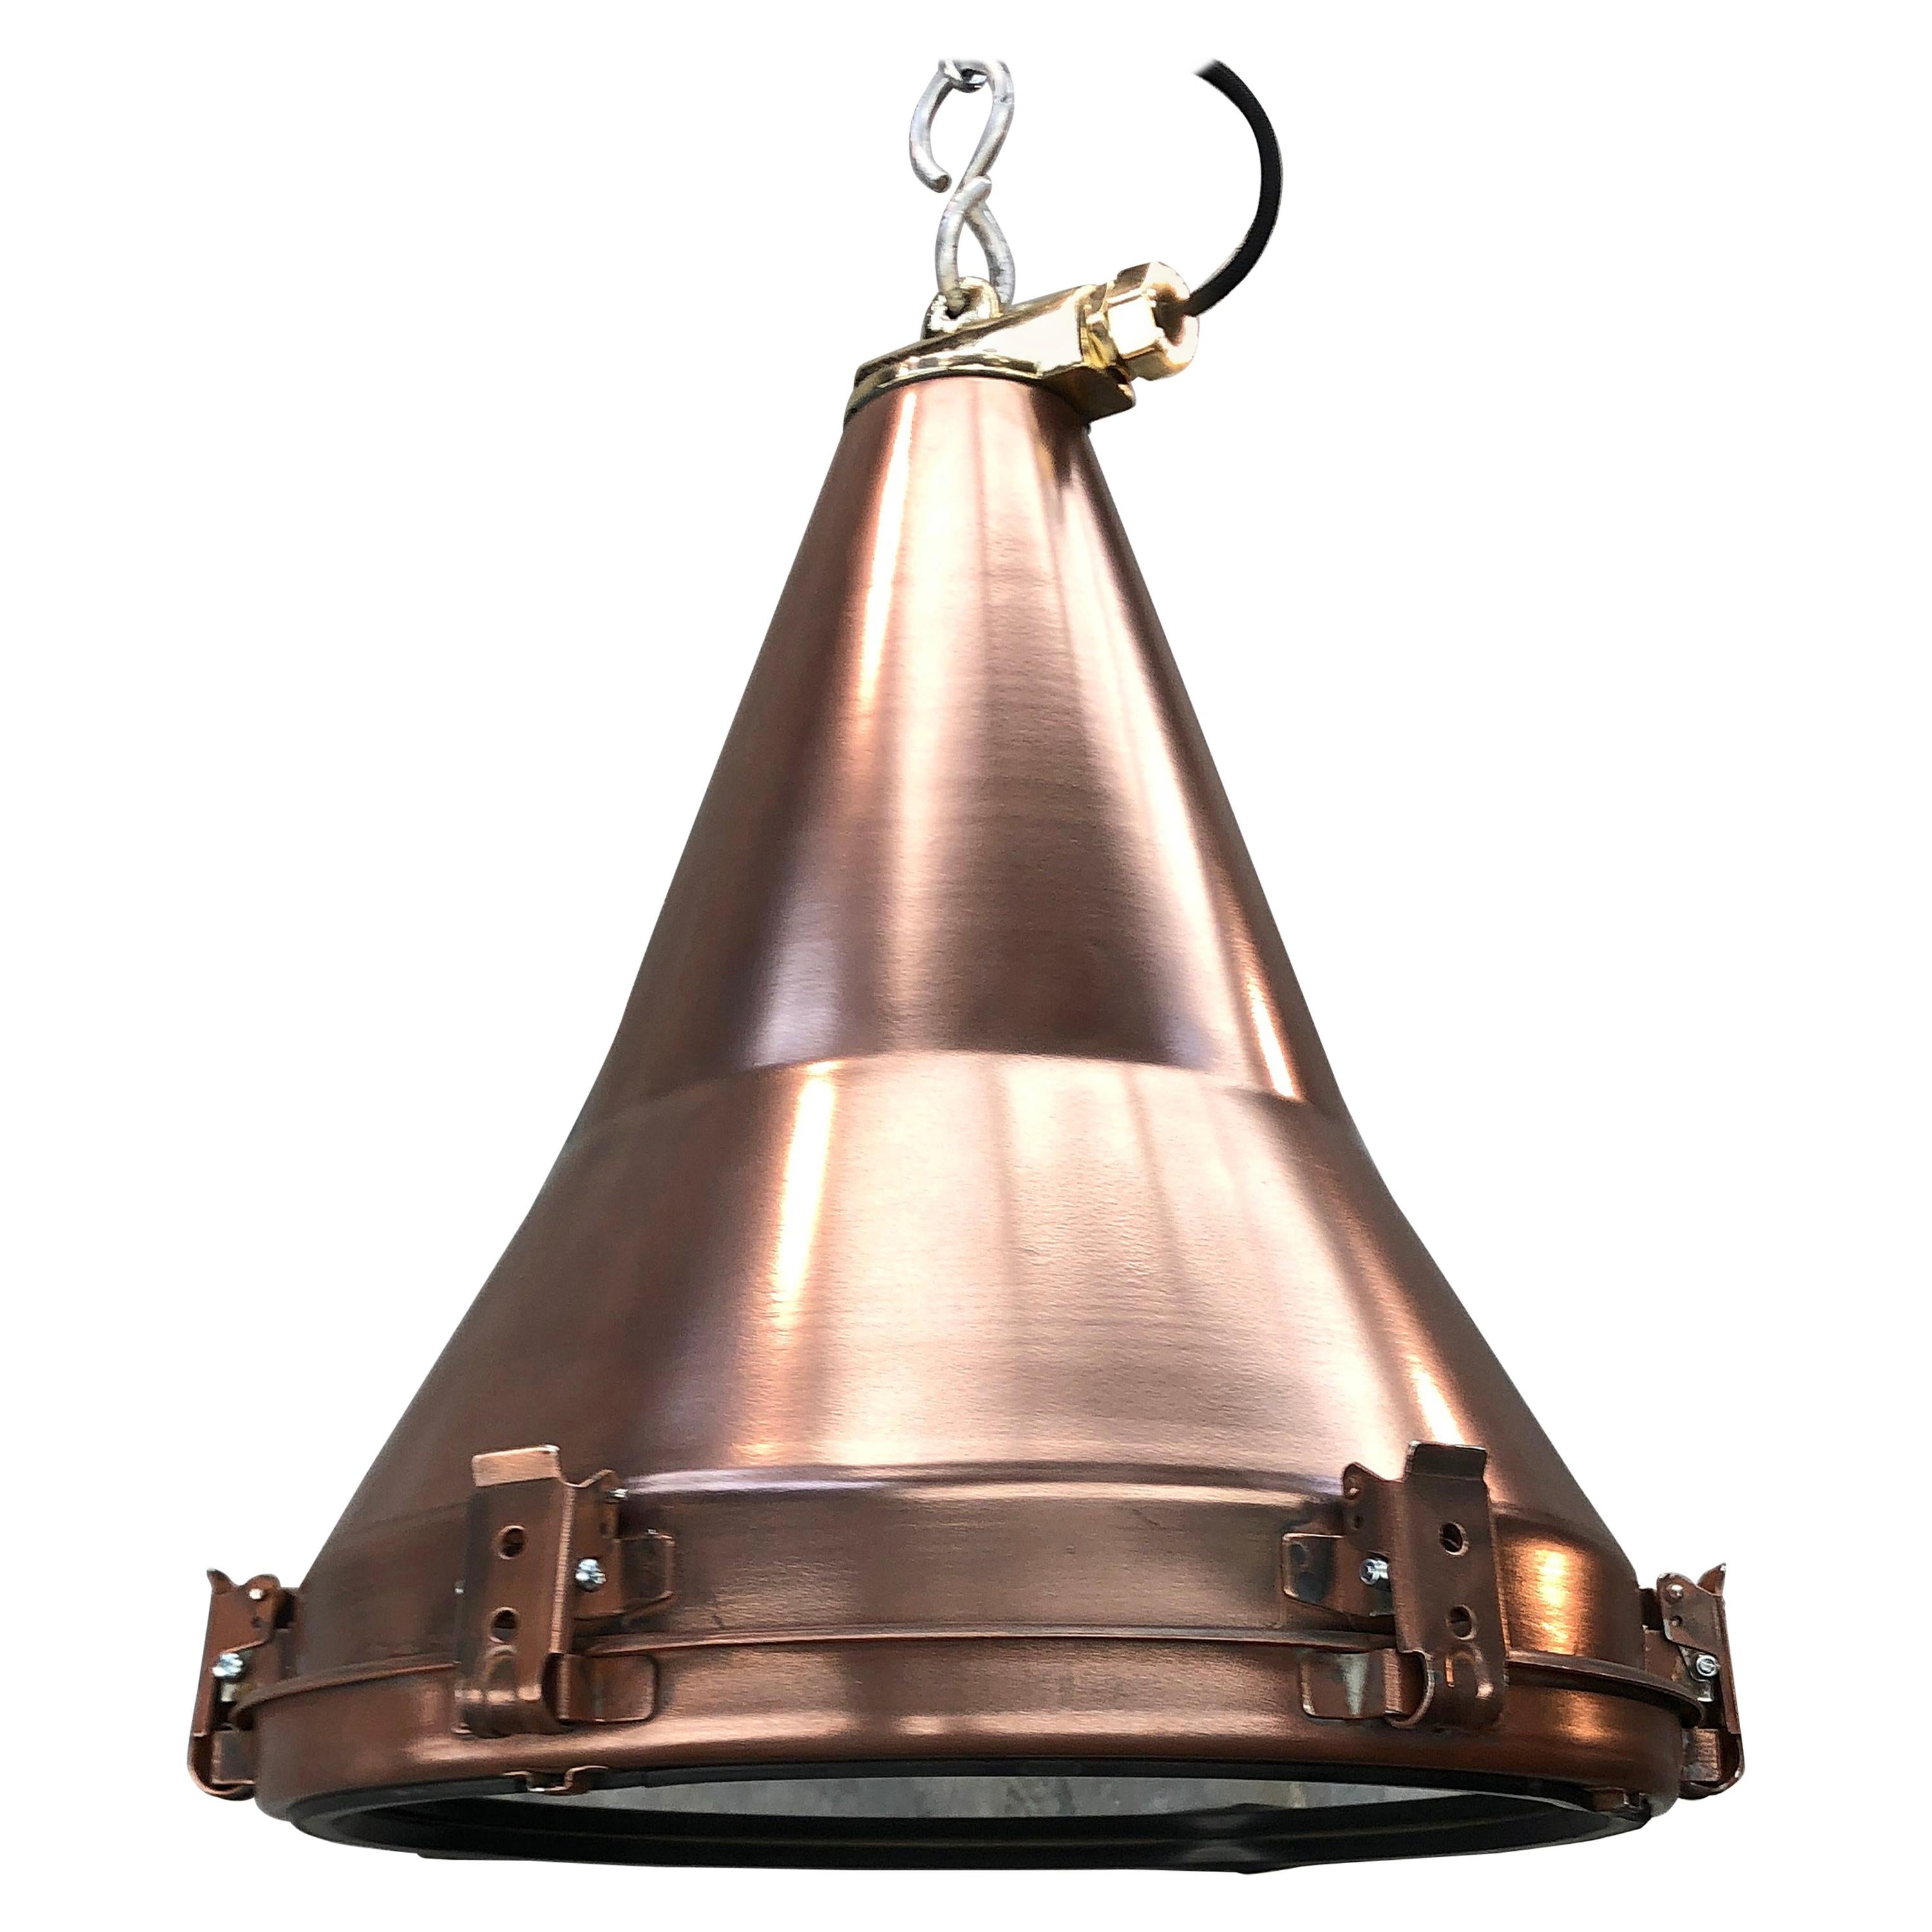 1970s Korean Copper, Cast Brass and Glass Industrial Flood Light Pendant Lamp